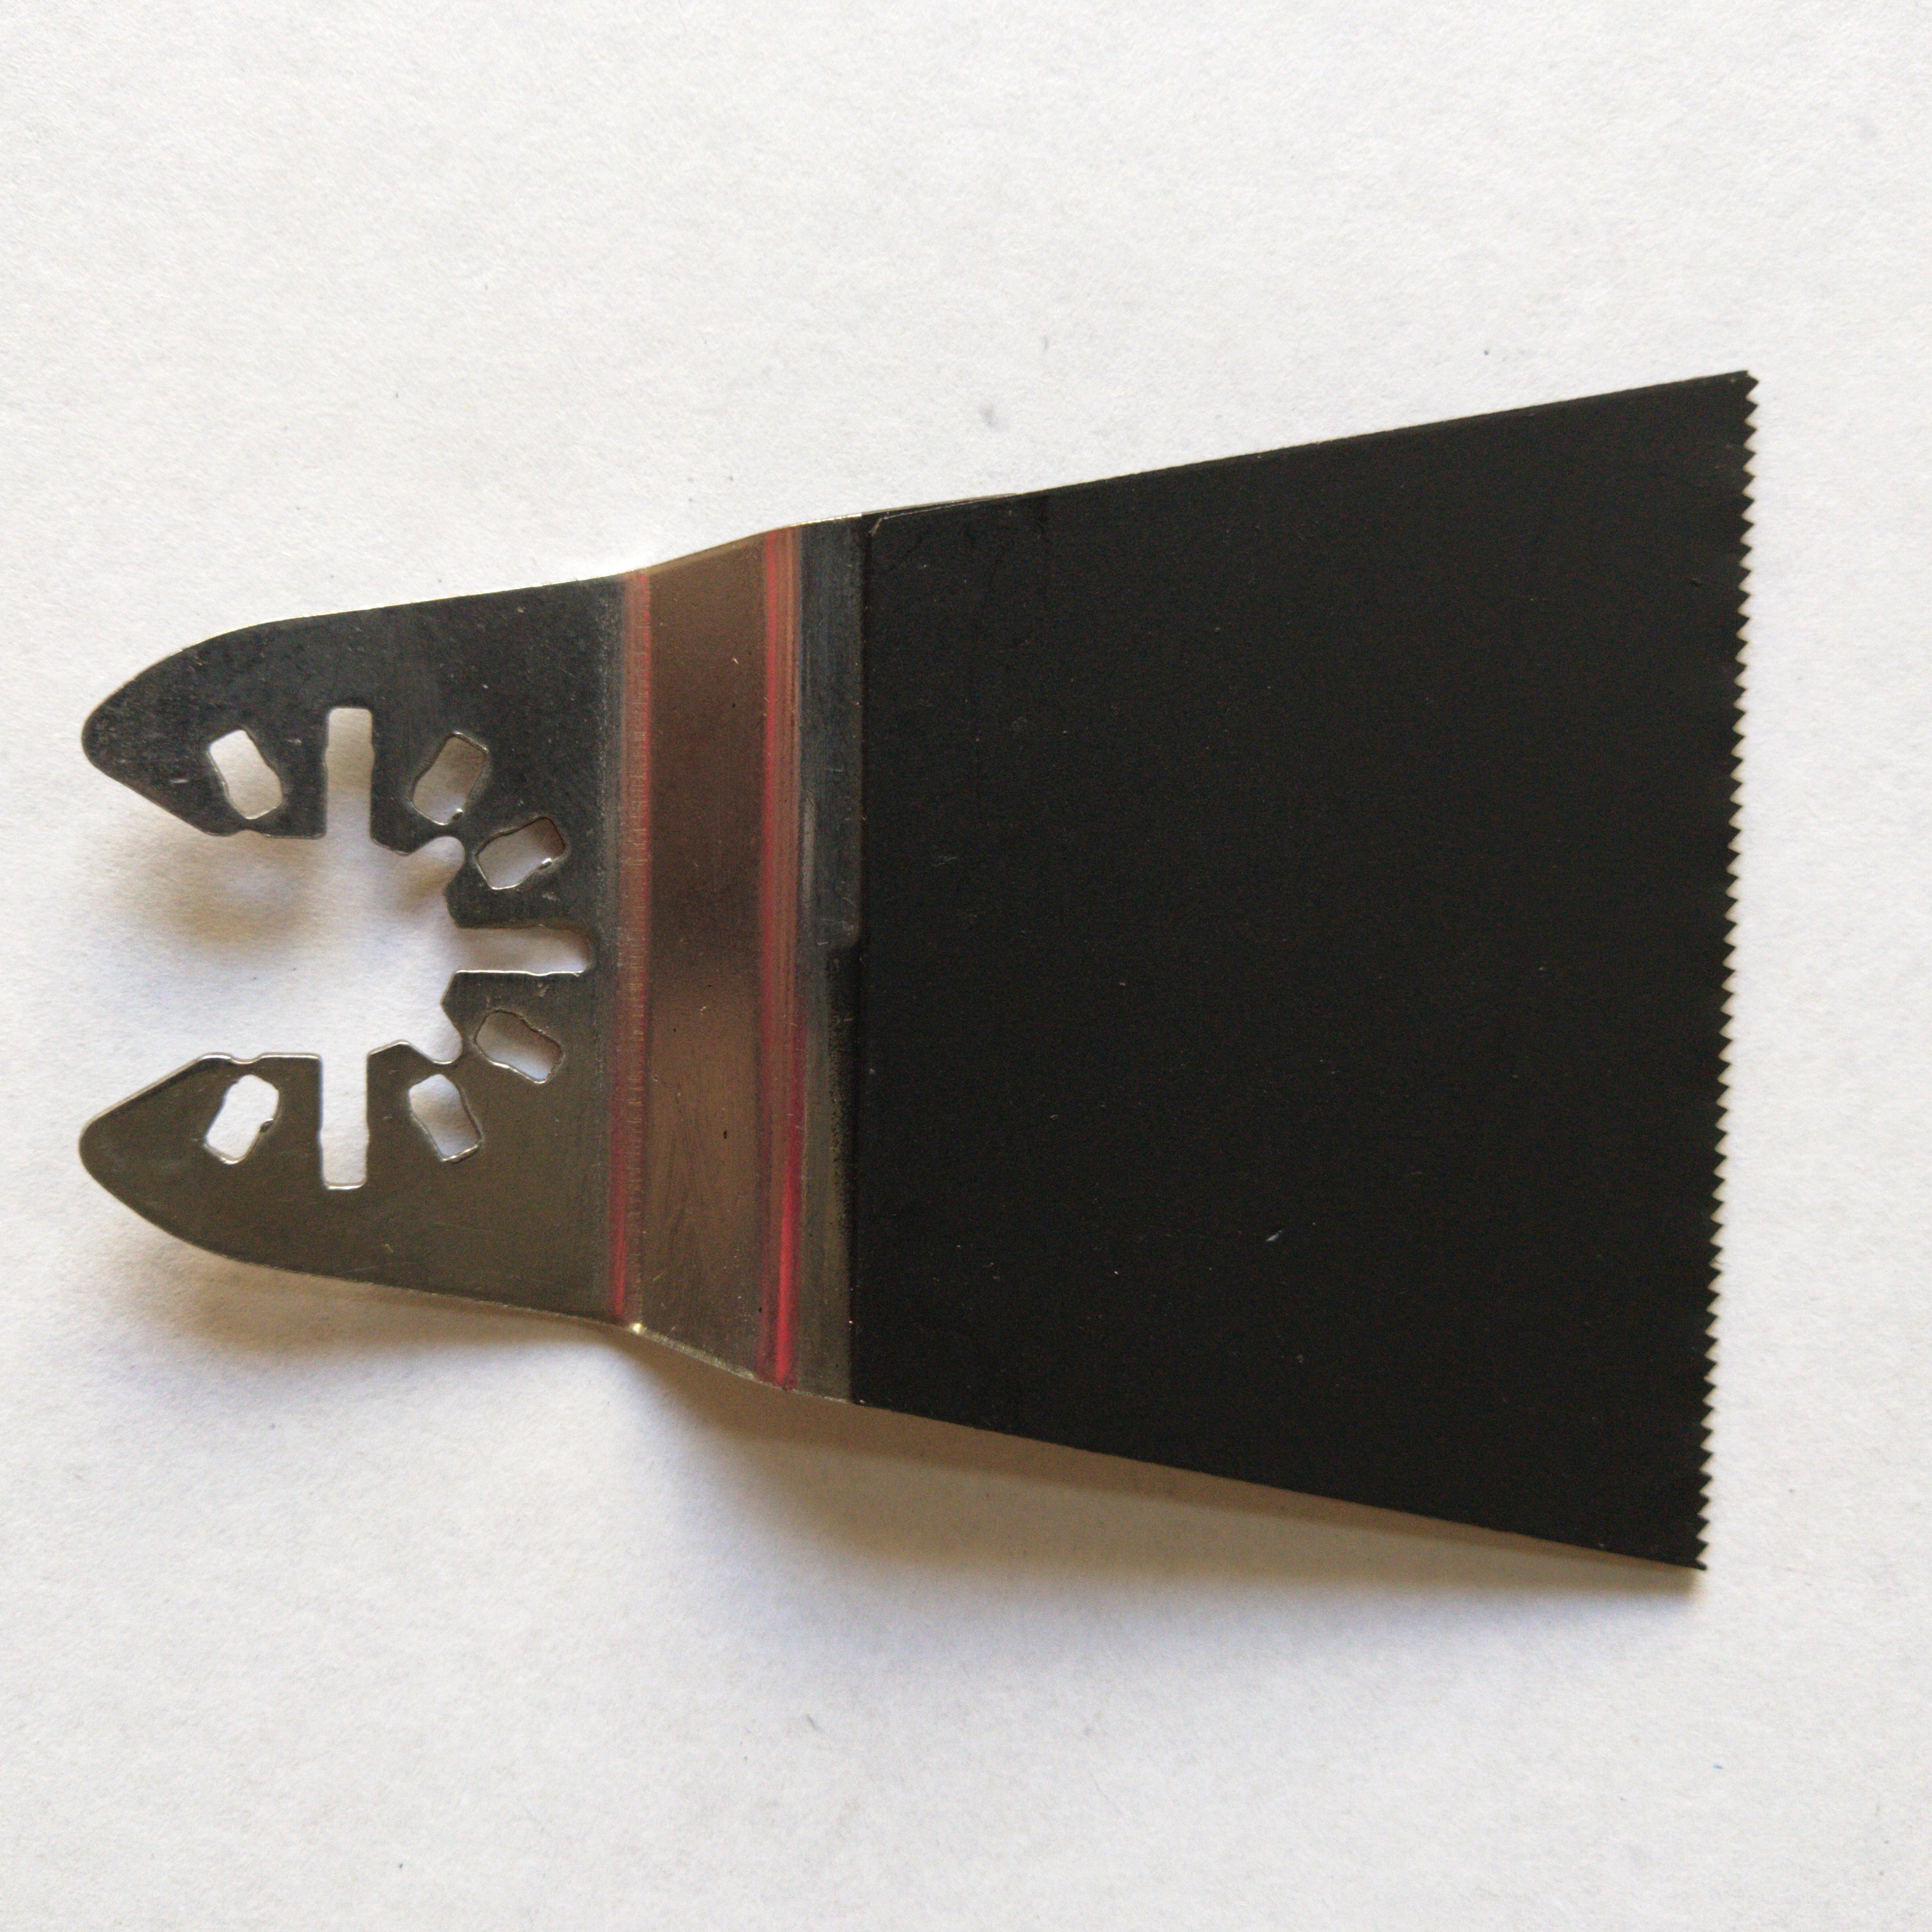 Custom Design 65mm multi-fit standard bi-metal oscillating saw blades for door jamb